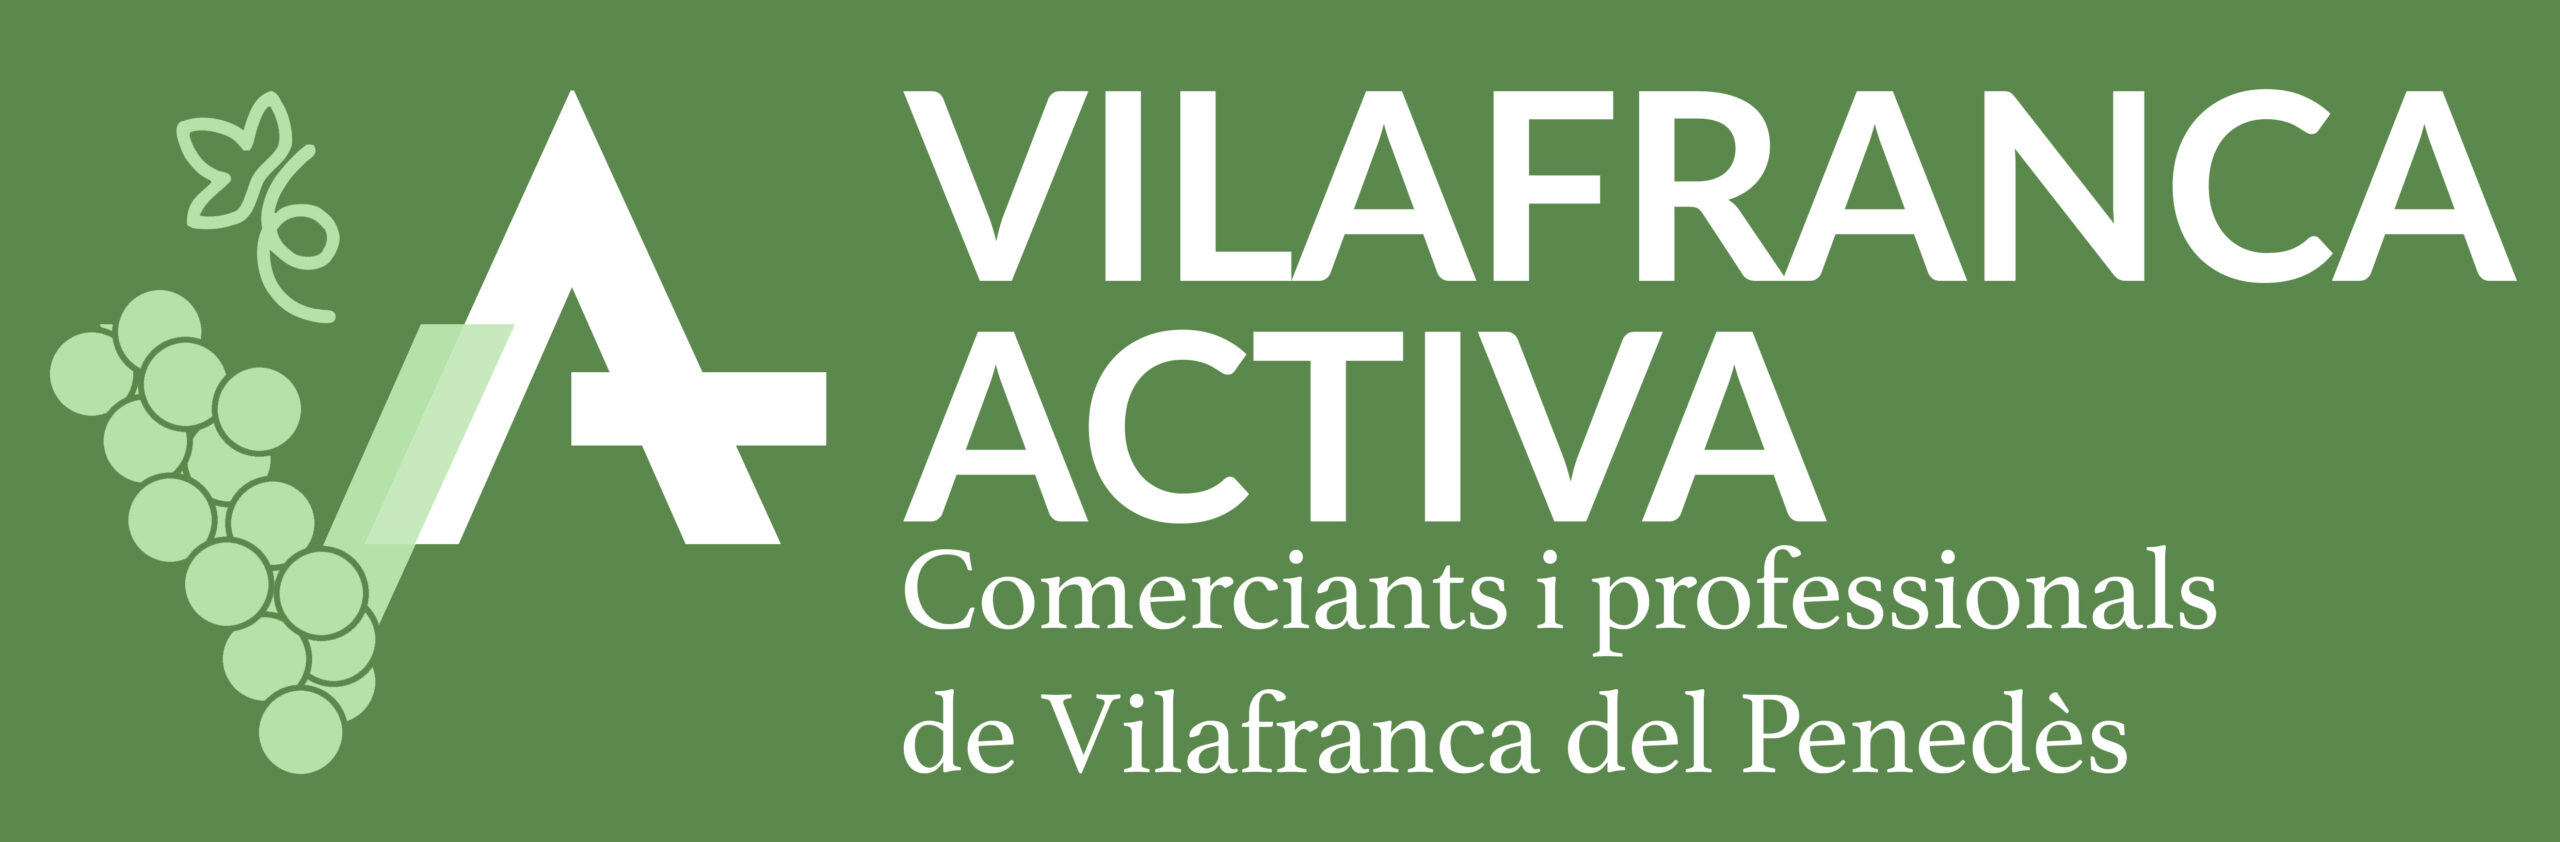 Vilafranca Activa